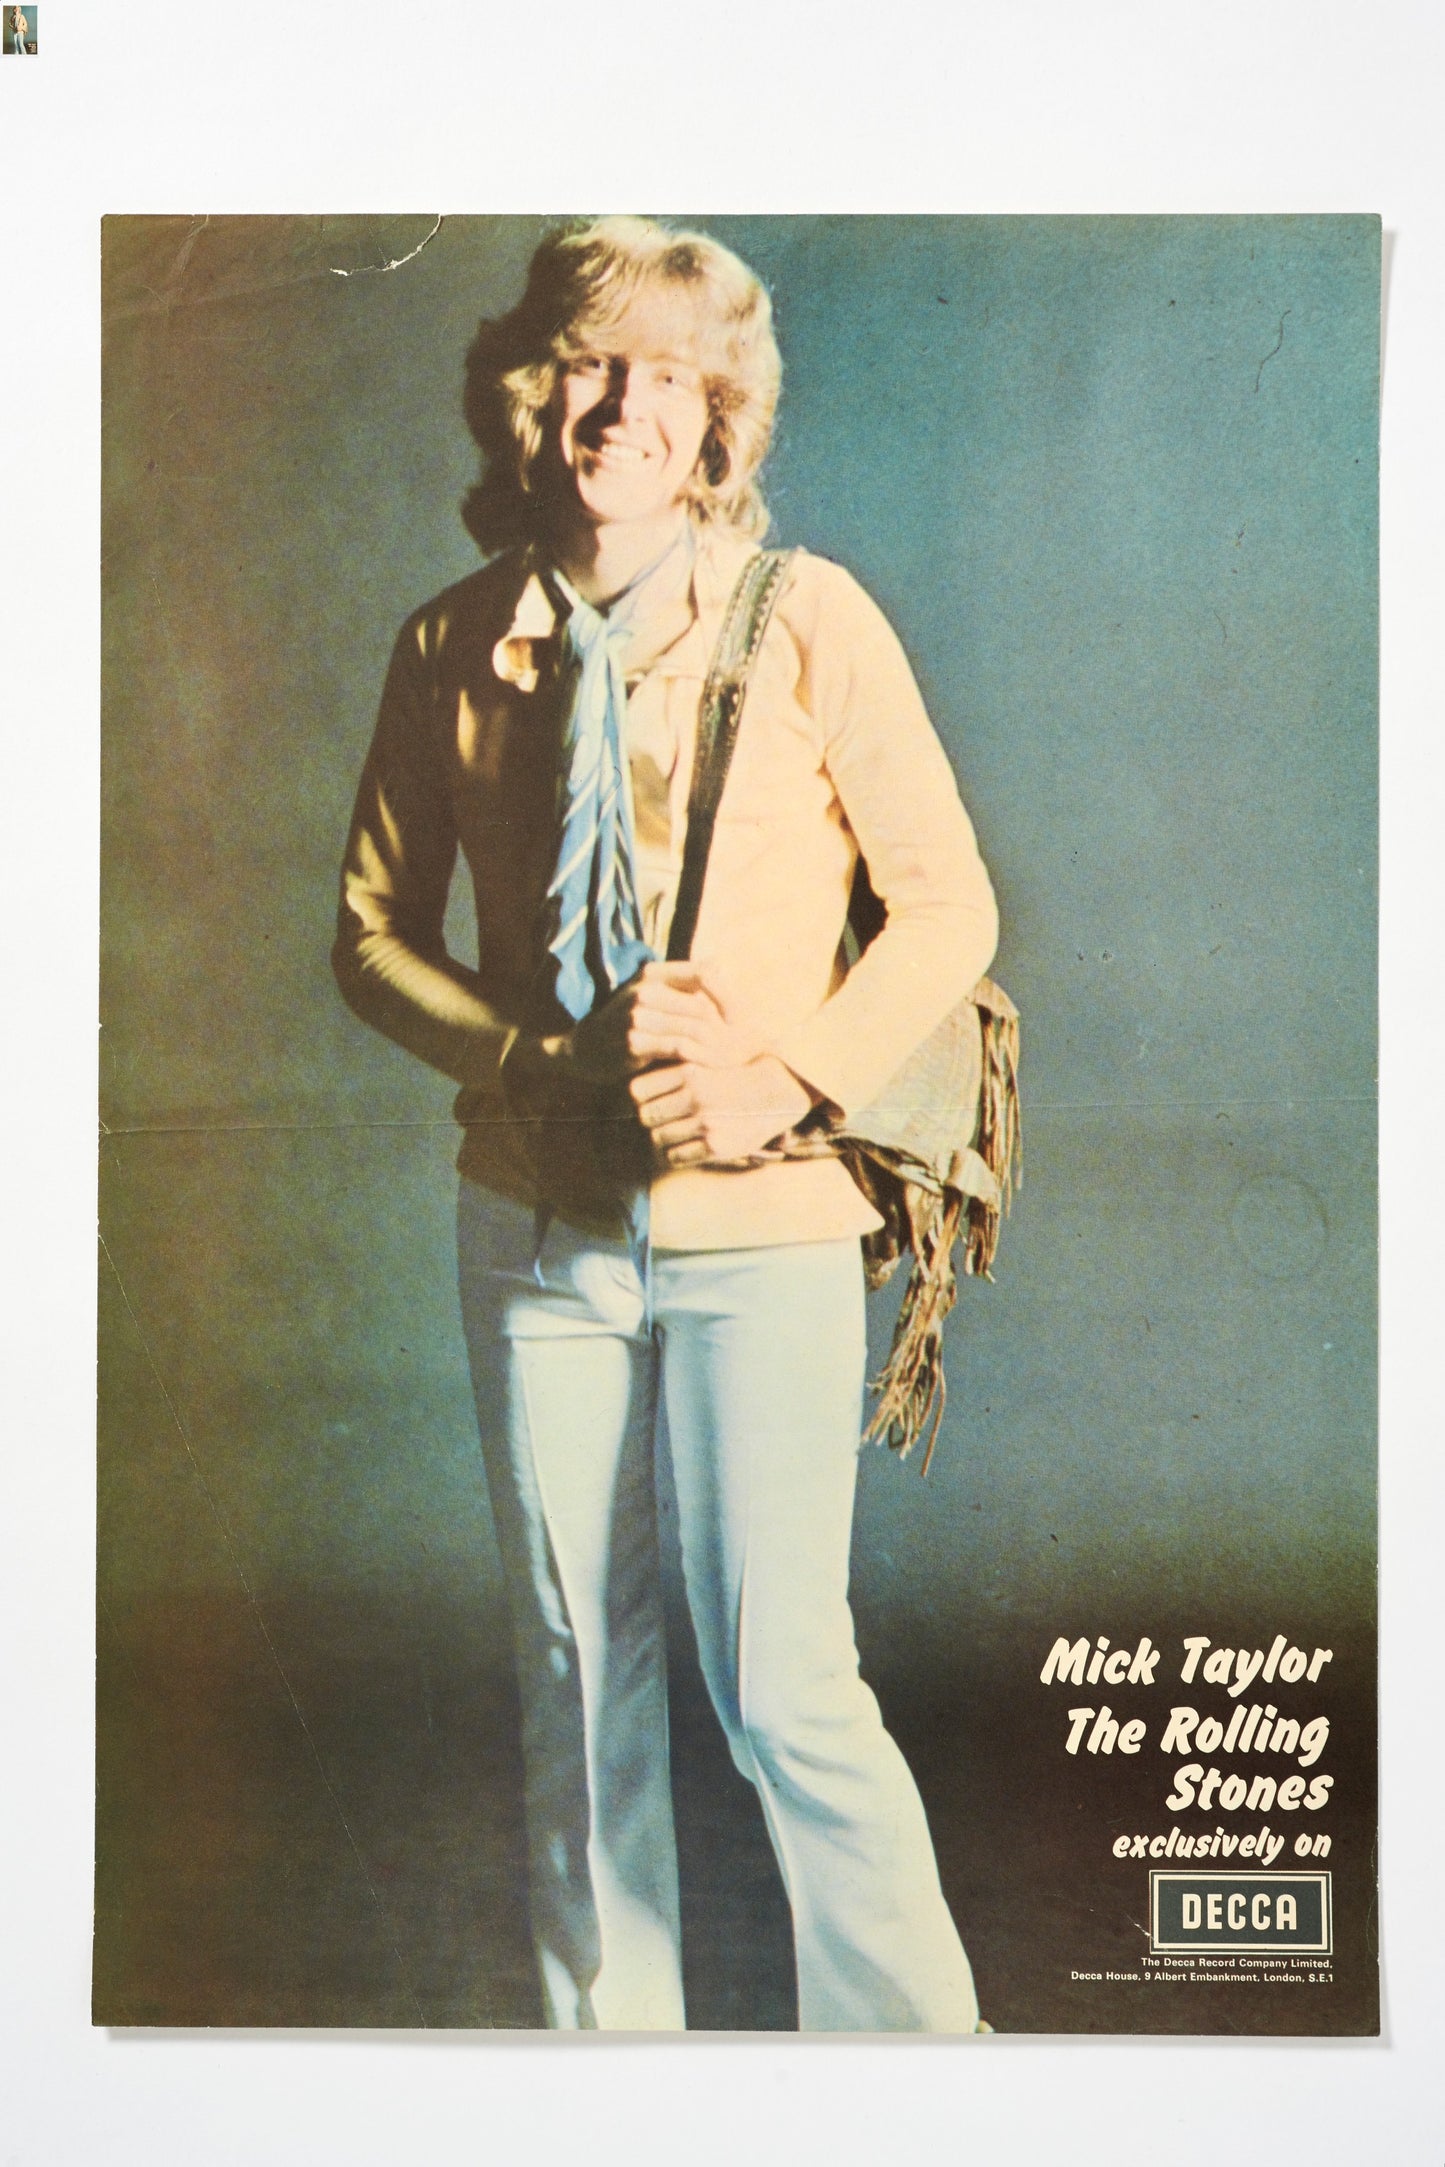 Mick Taylor - The Rolling Stones Decca Records U.K. Promo Poster, 1969